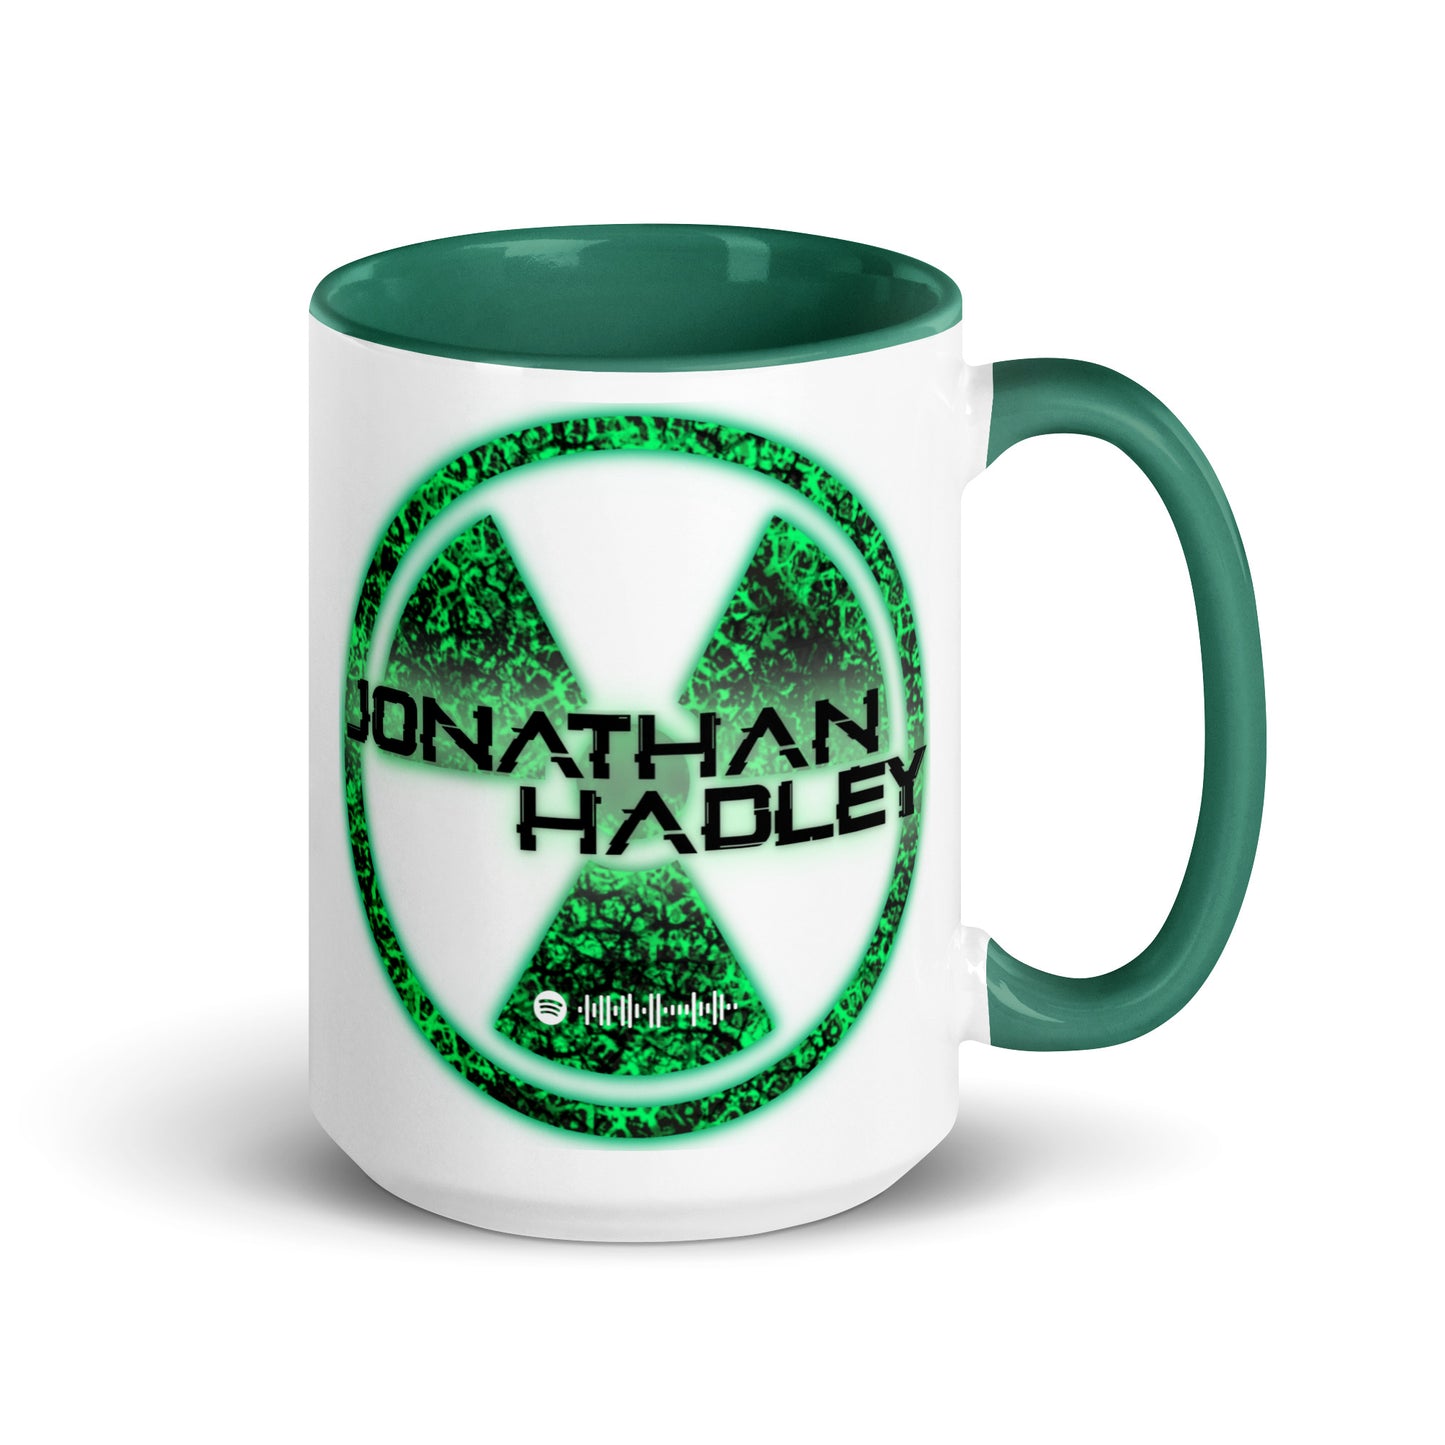 Jonathan Hadley Green Radiation Mug With Color Inside